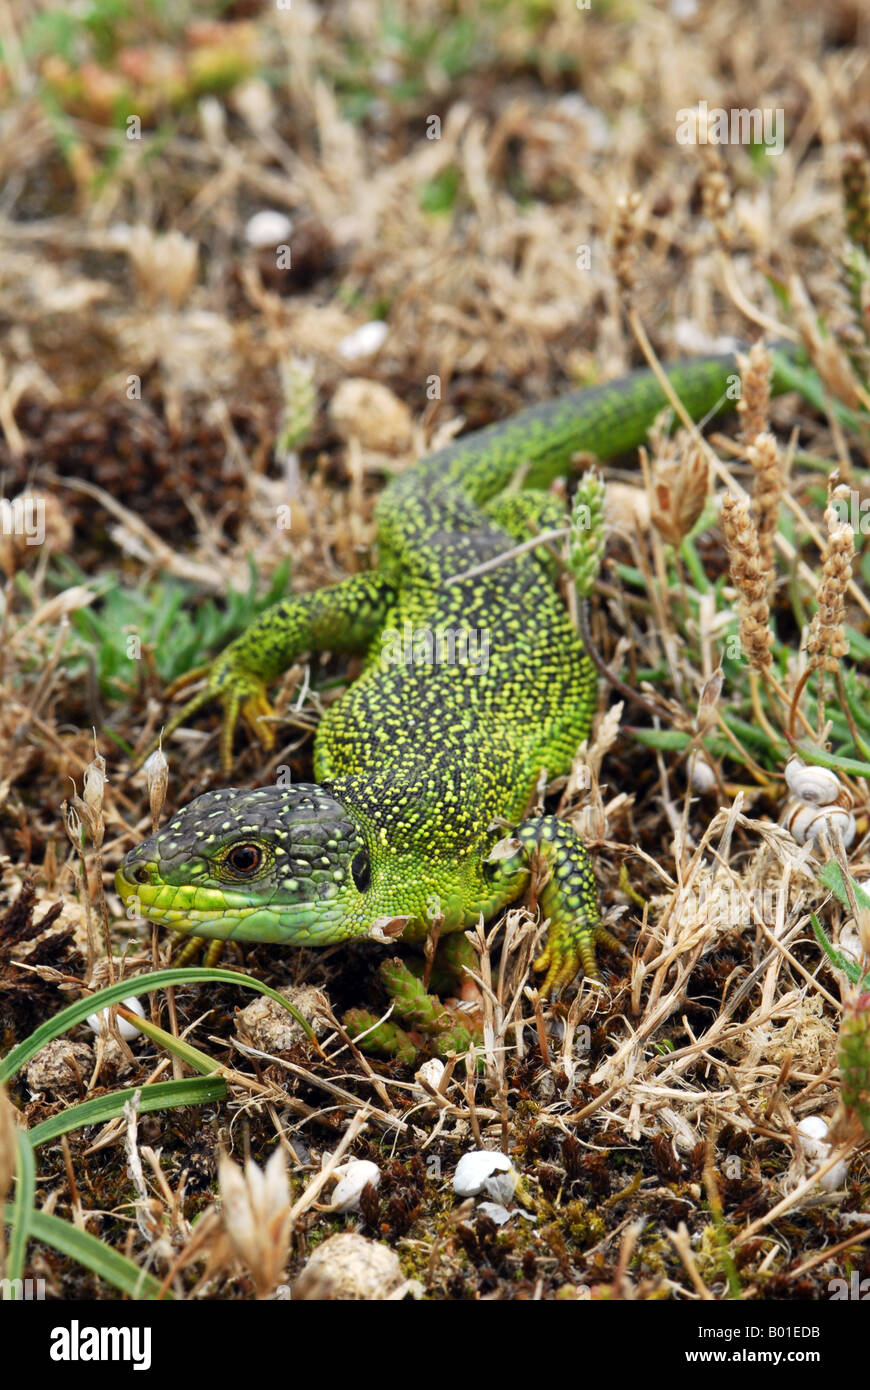 Green Lizard full length Stock Photo